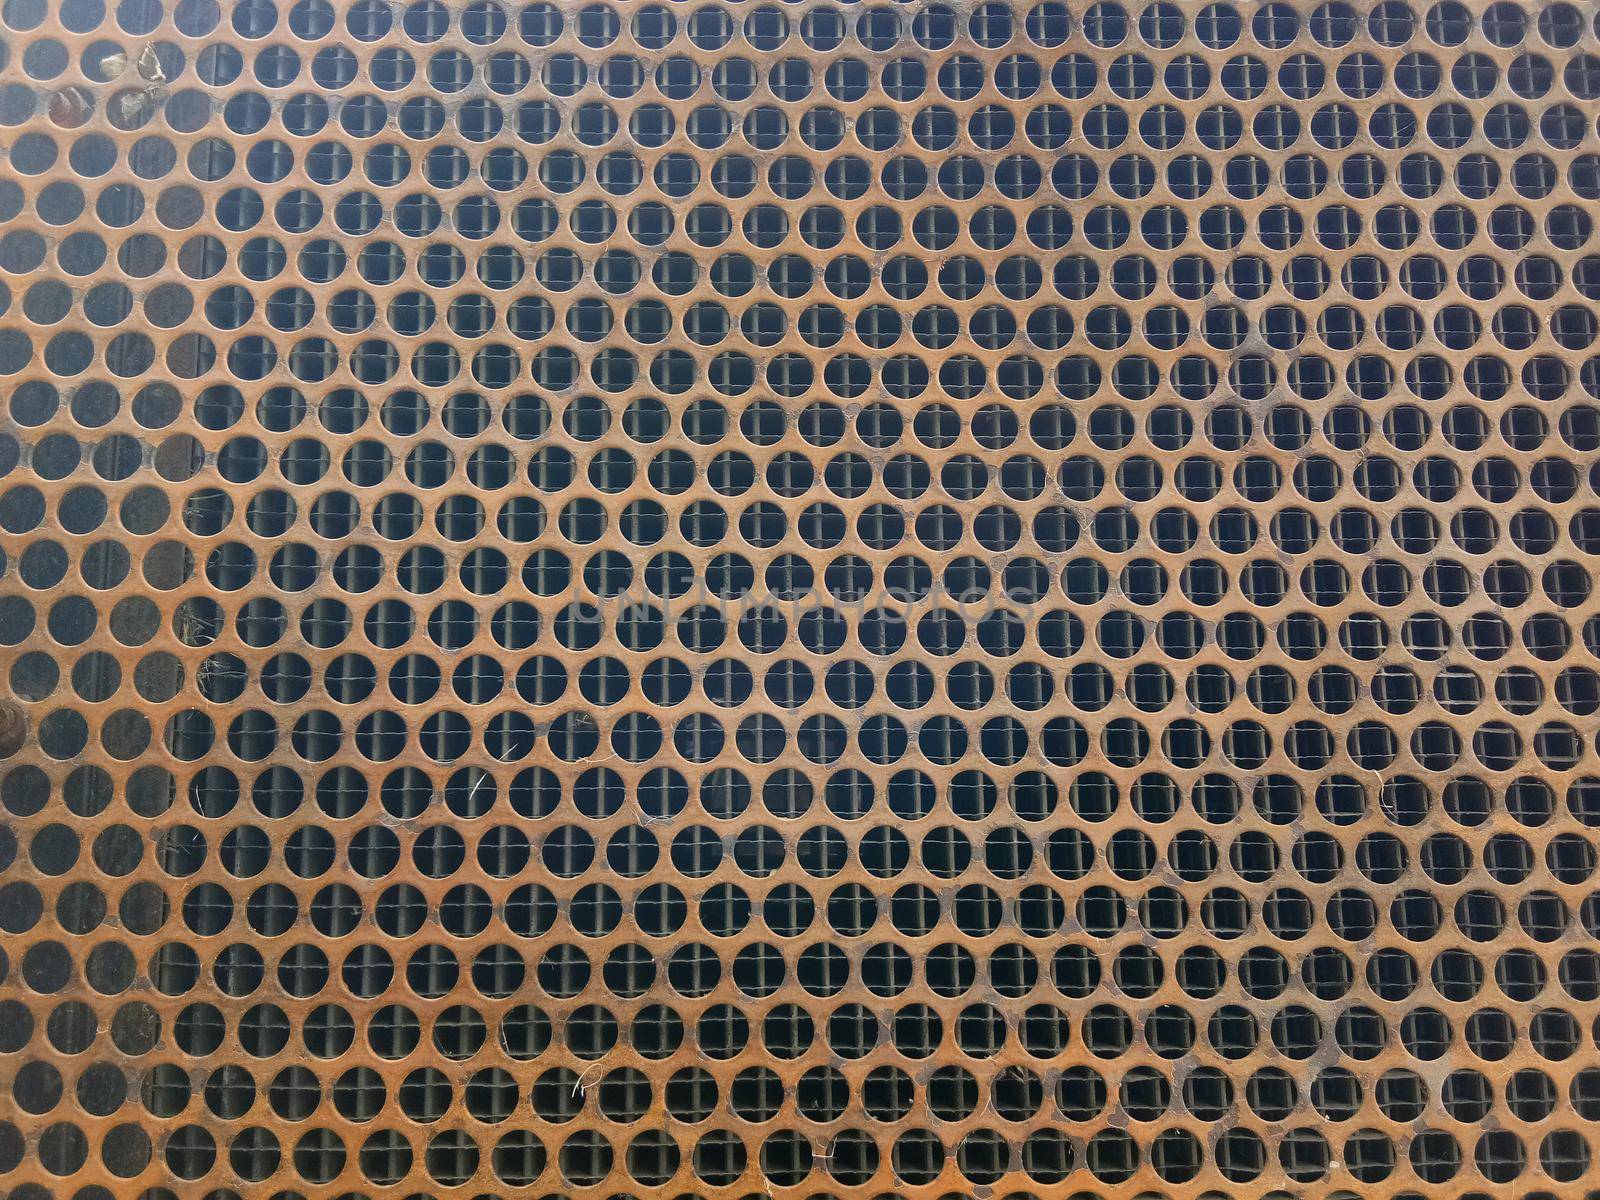 Old Steel grating texture background,Metal grid seamless pattern.
